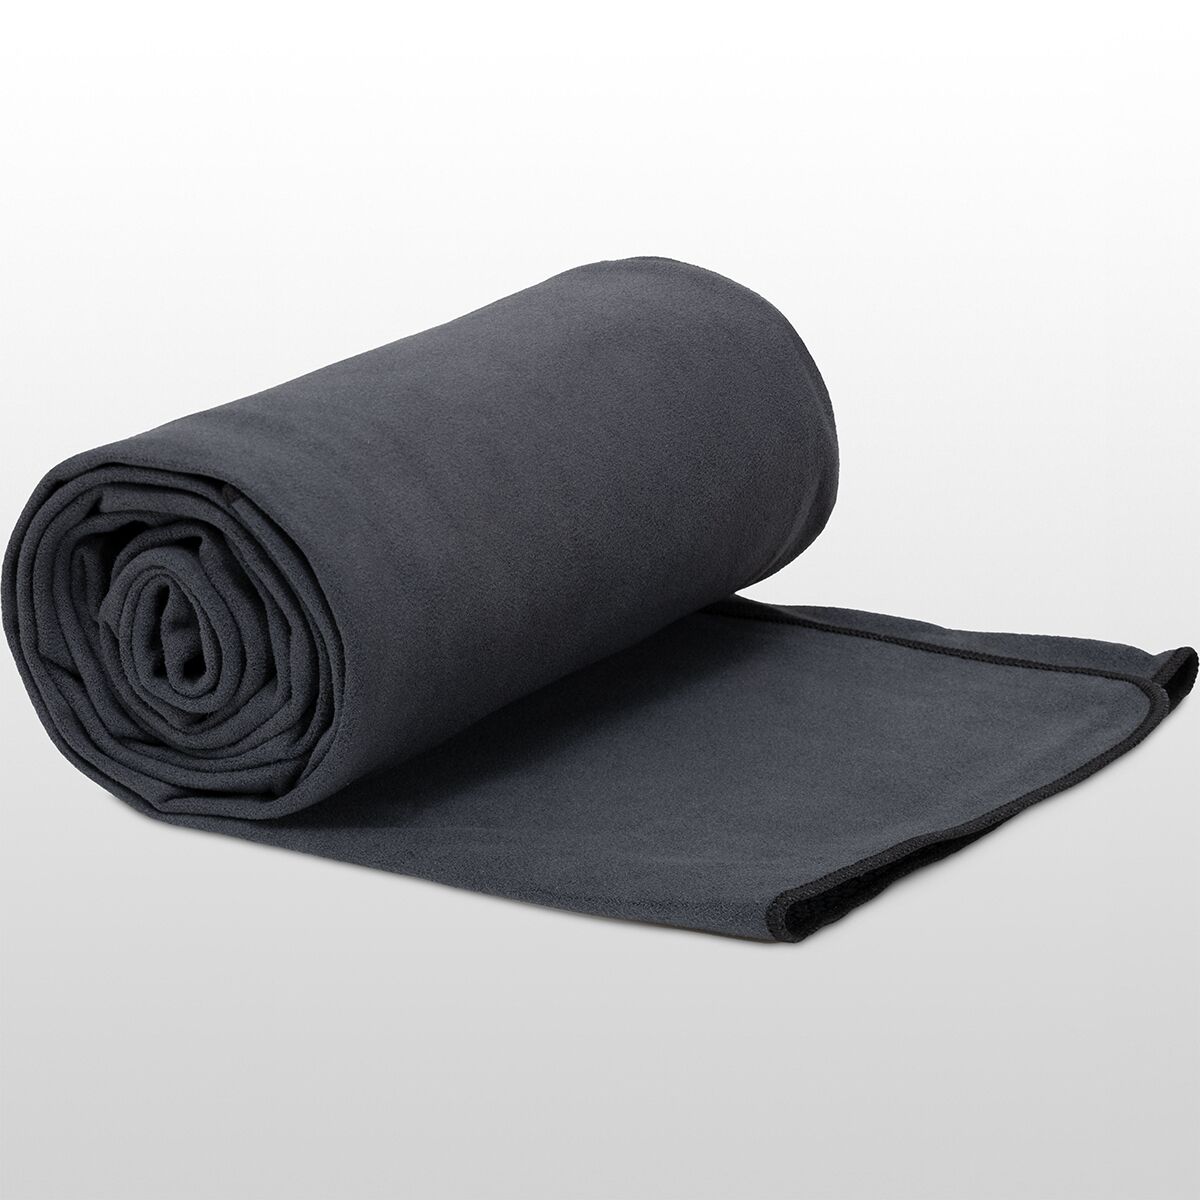 ALO YOGA Grounded No-Slip Mat Towel - Yoga